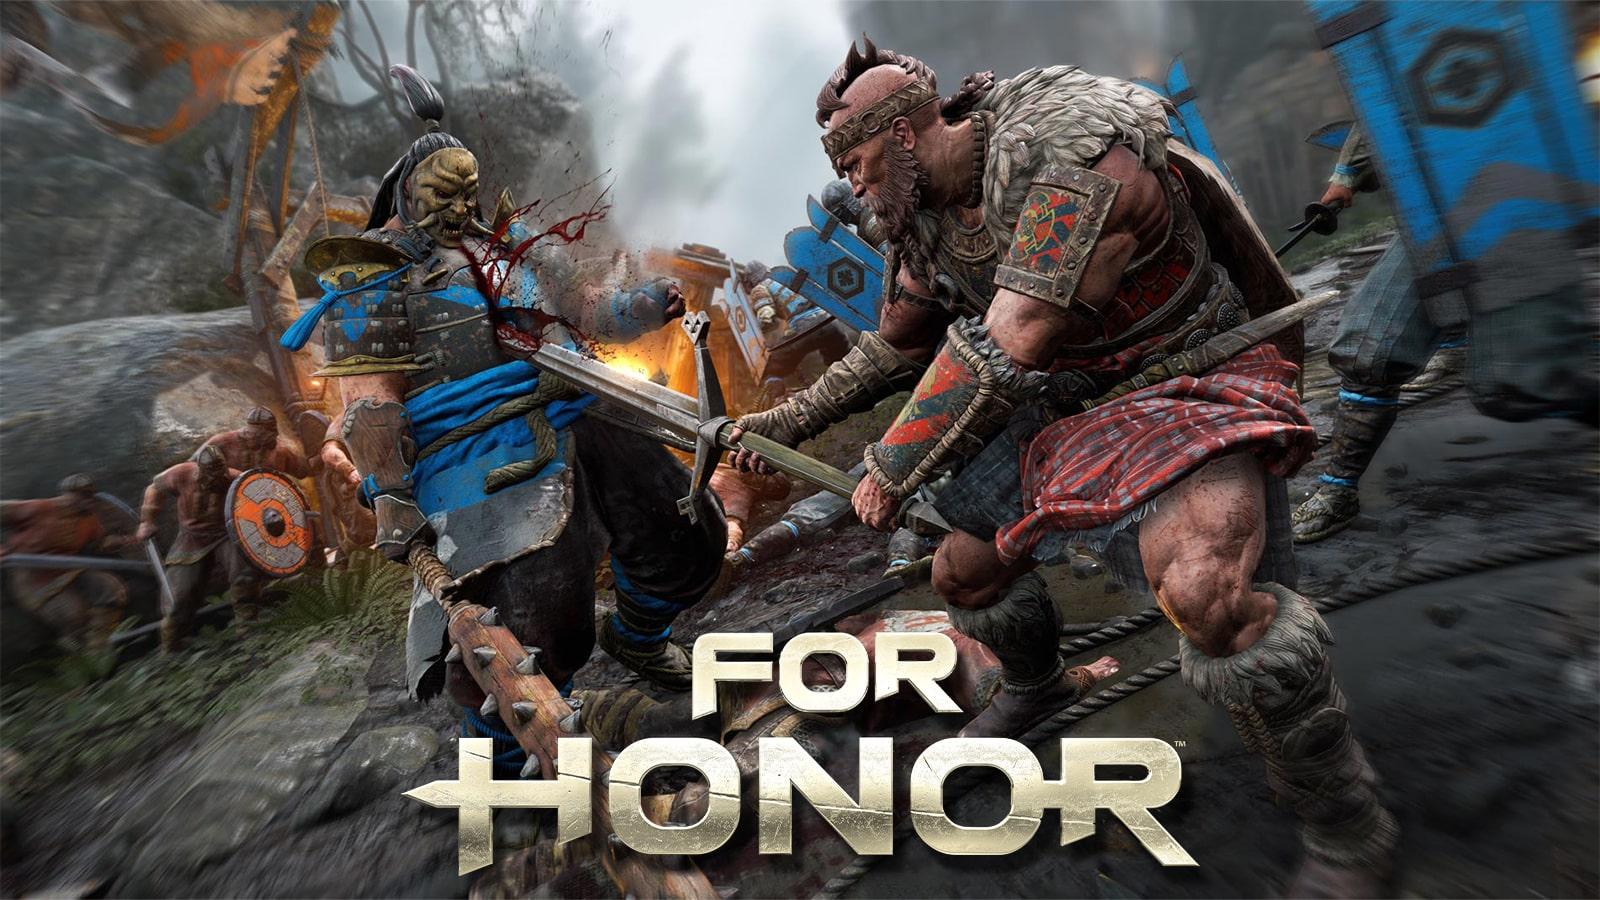 For Honor – Knight heroes breakdown guide